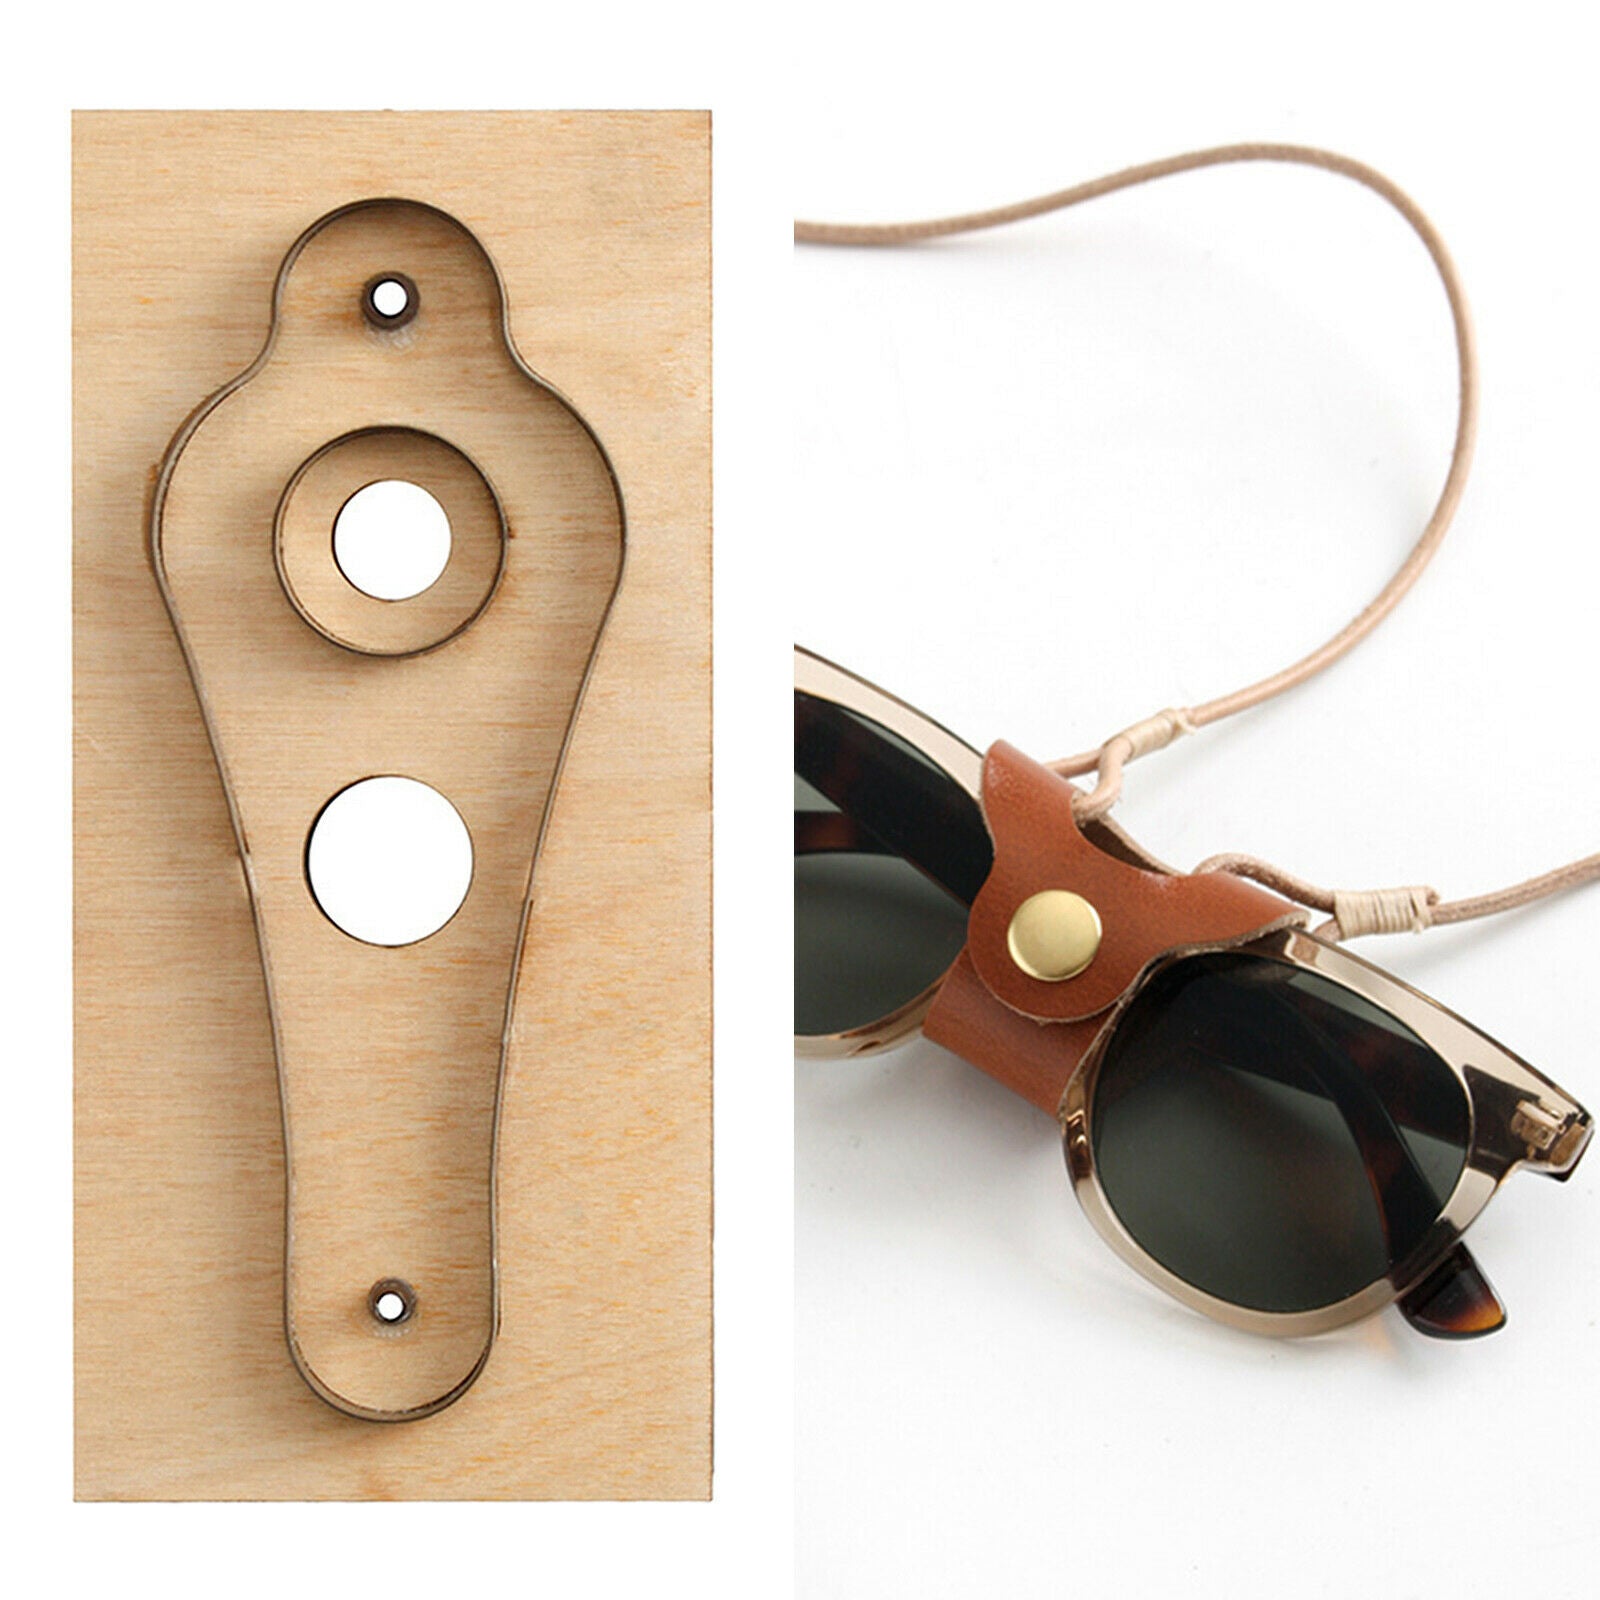 Leather Craft Dies Eyewear Lanyard Cutter Cut Mold Crafting Template Blade